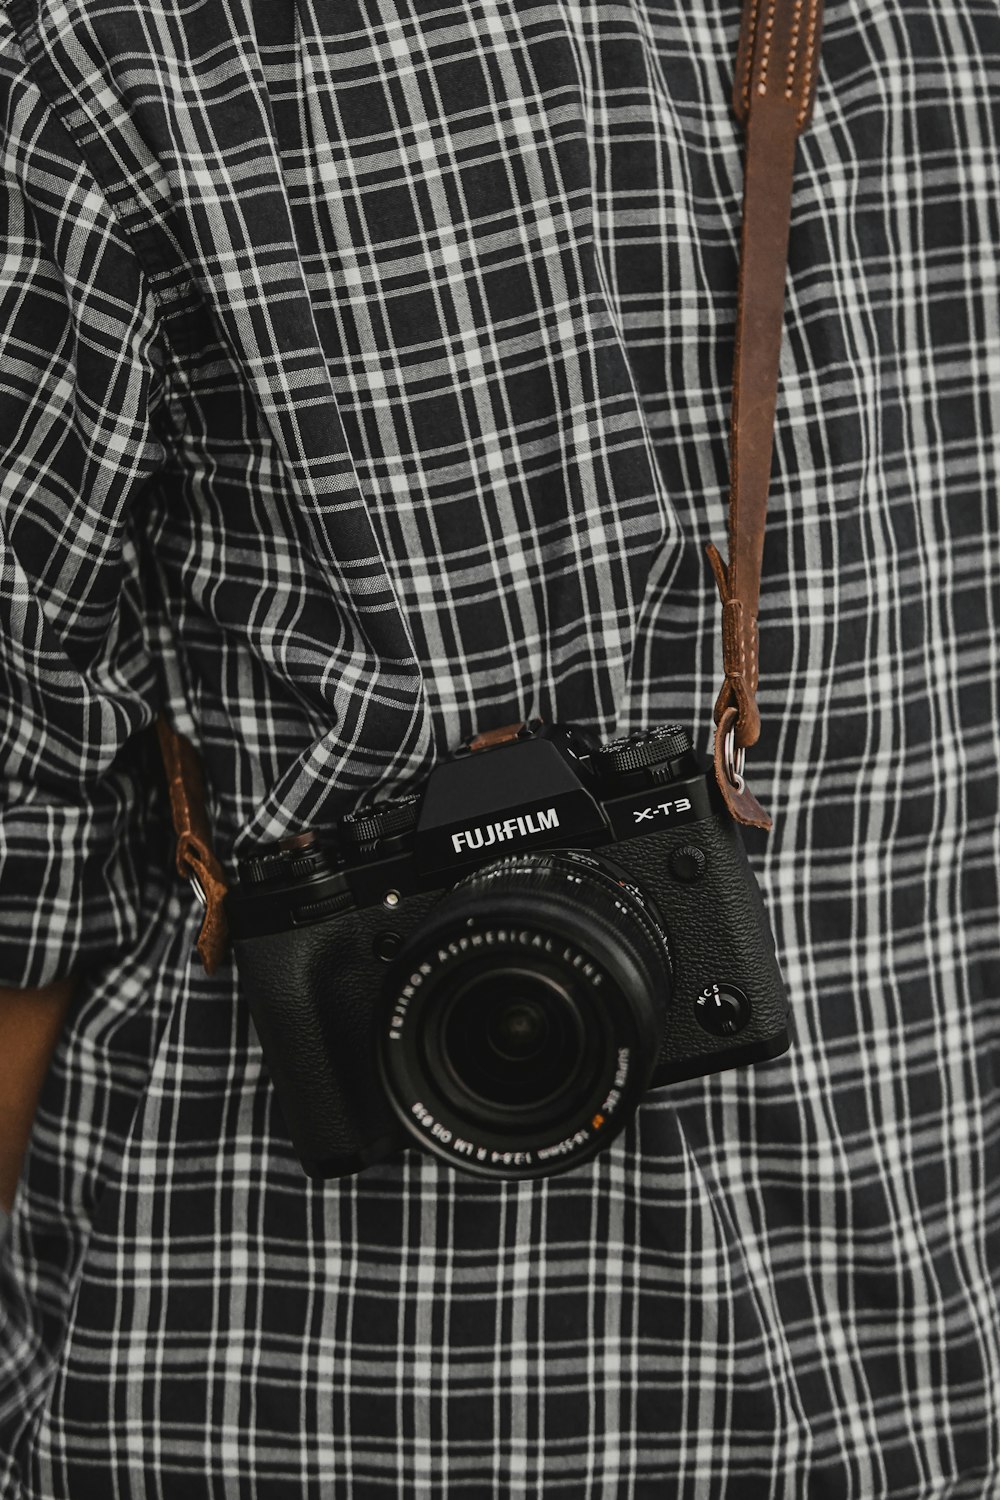 Cámara réflex Nikon negra sobre textil a cuadros blancos y negros